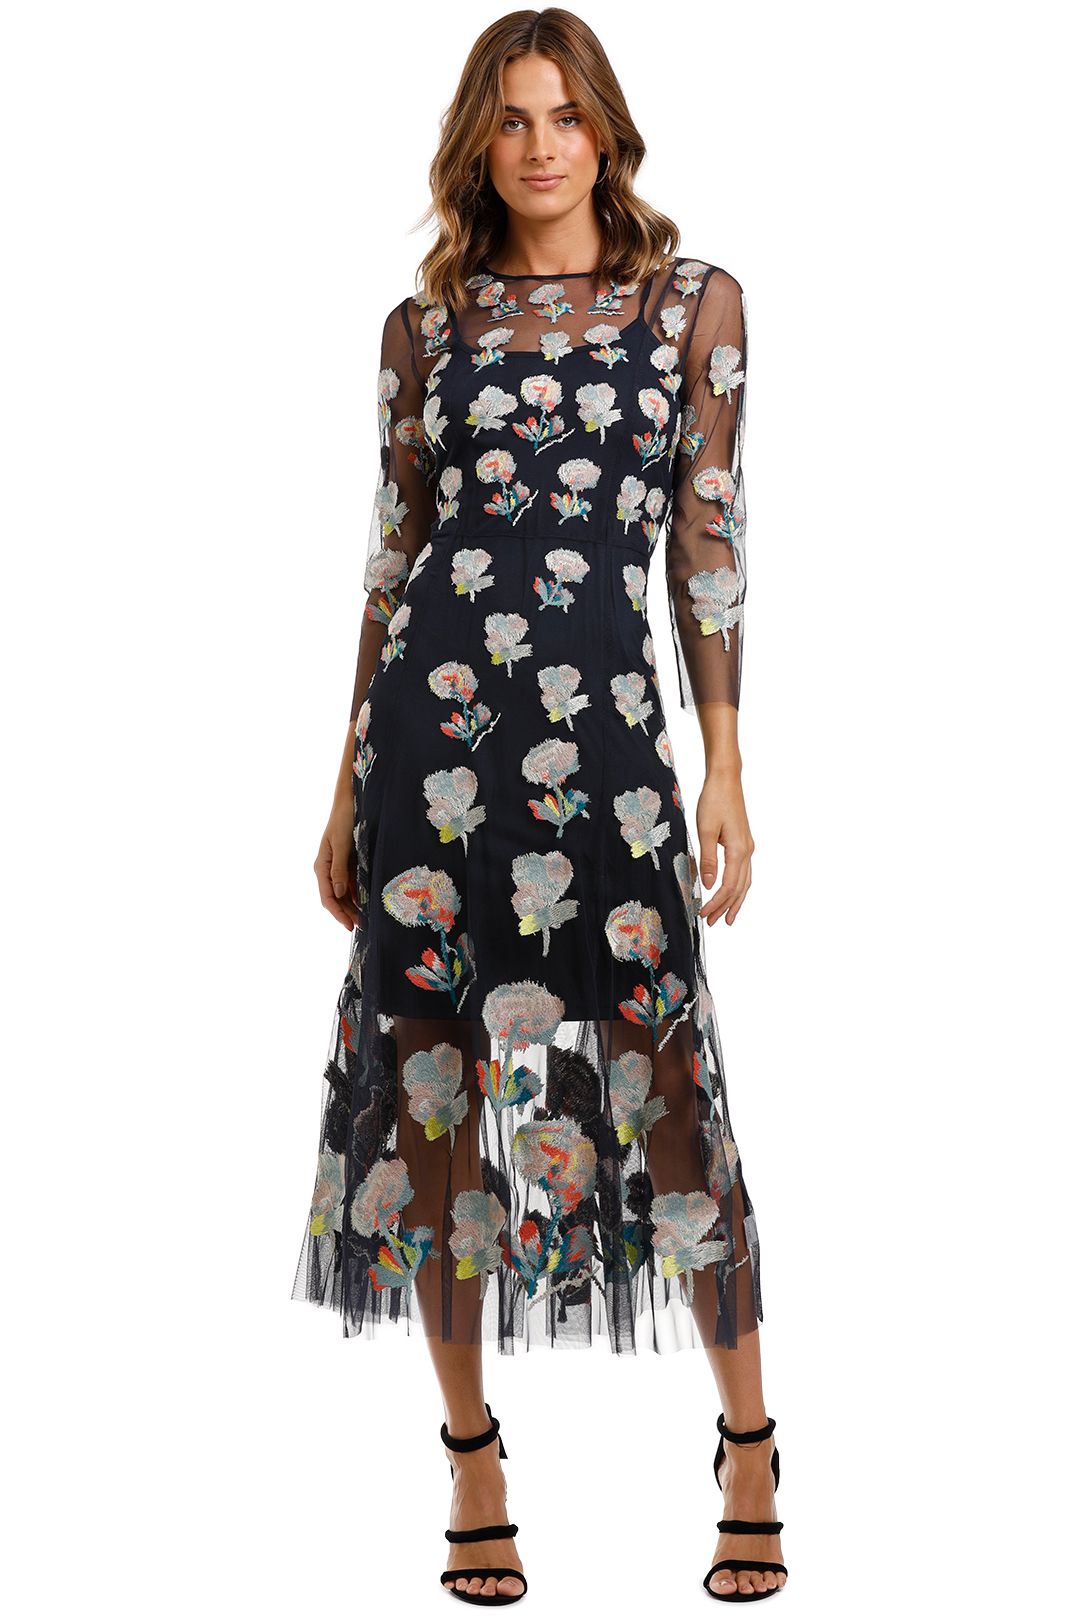 Moss & Spy Dresses | Shop Designer M&S Clothing Online